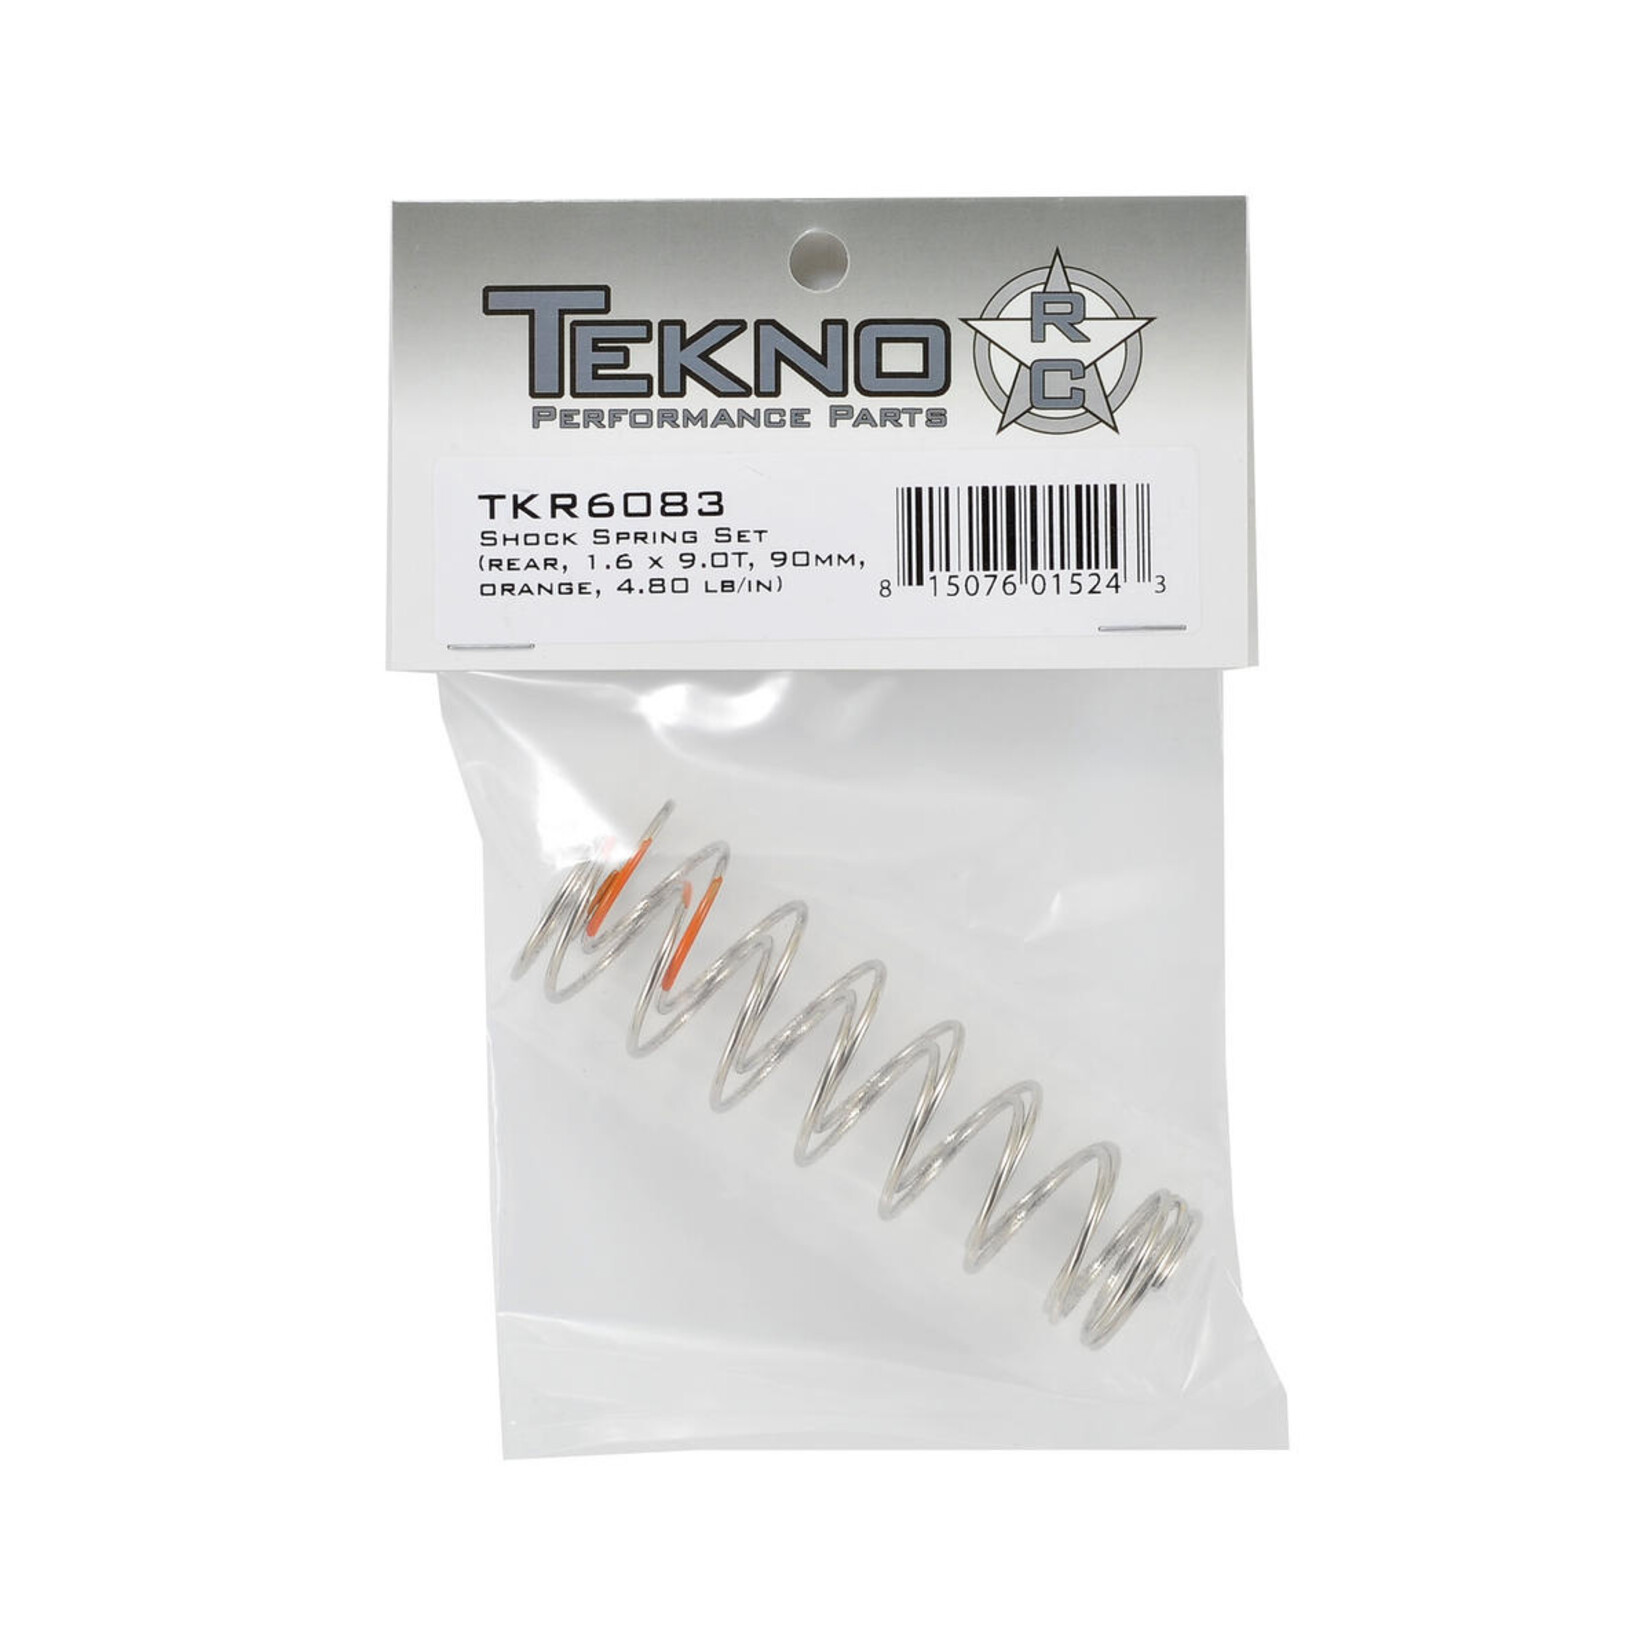 Tekno RC Tekno RC 90mm Rear Shock Spring Set (Orange) (1.6 x 9.0T) (2) #TKR6083